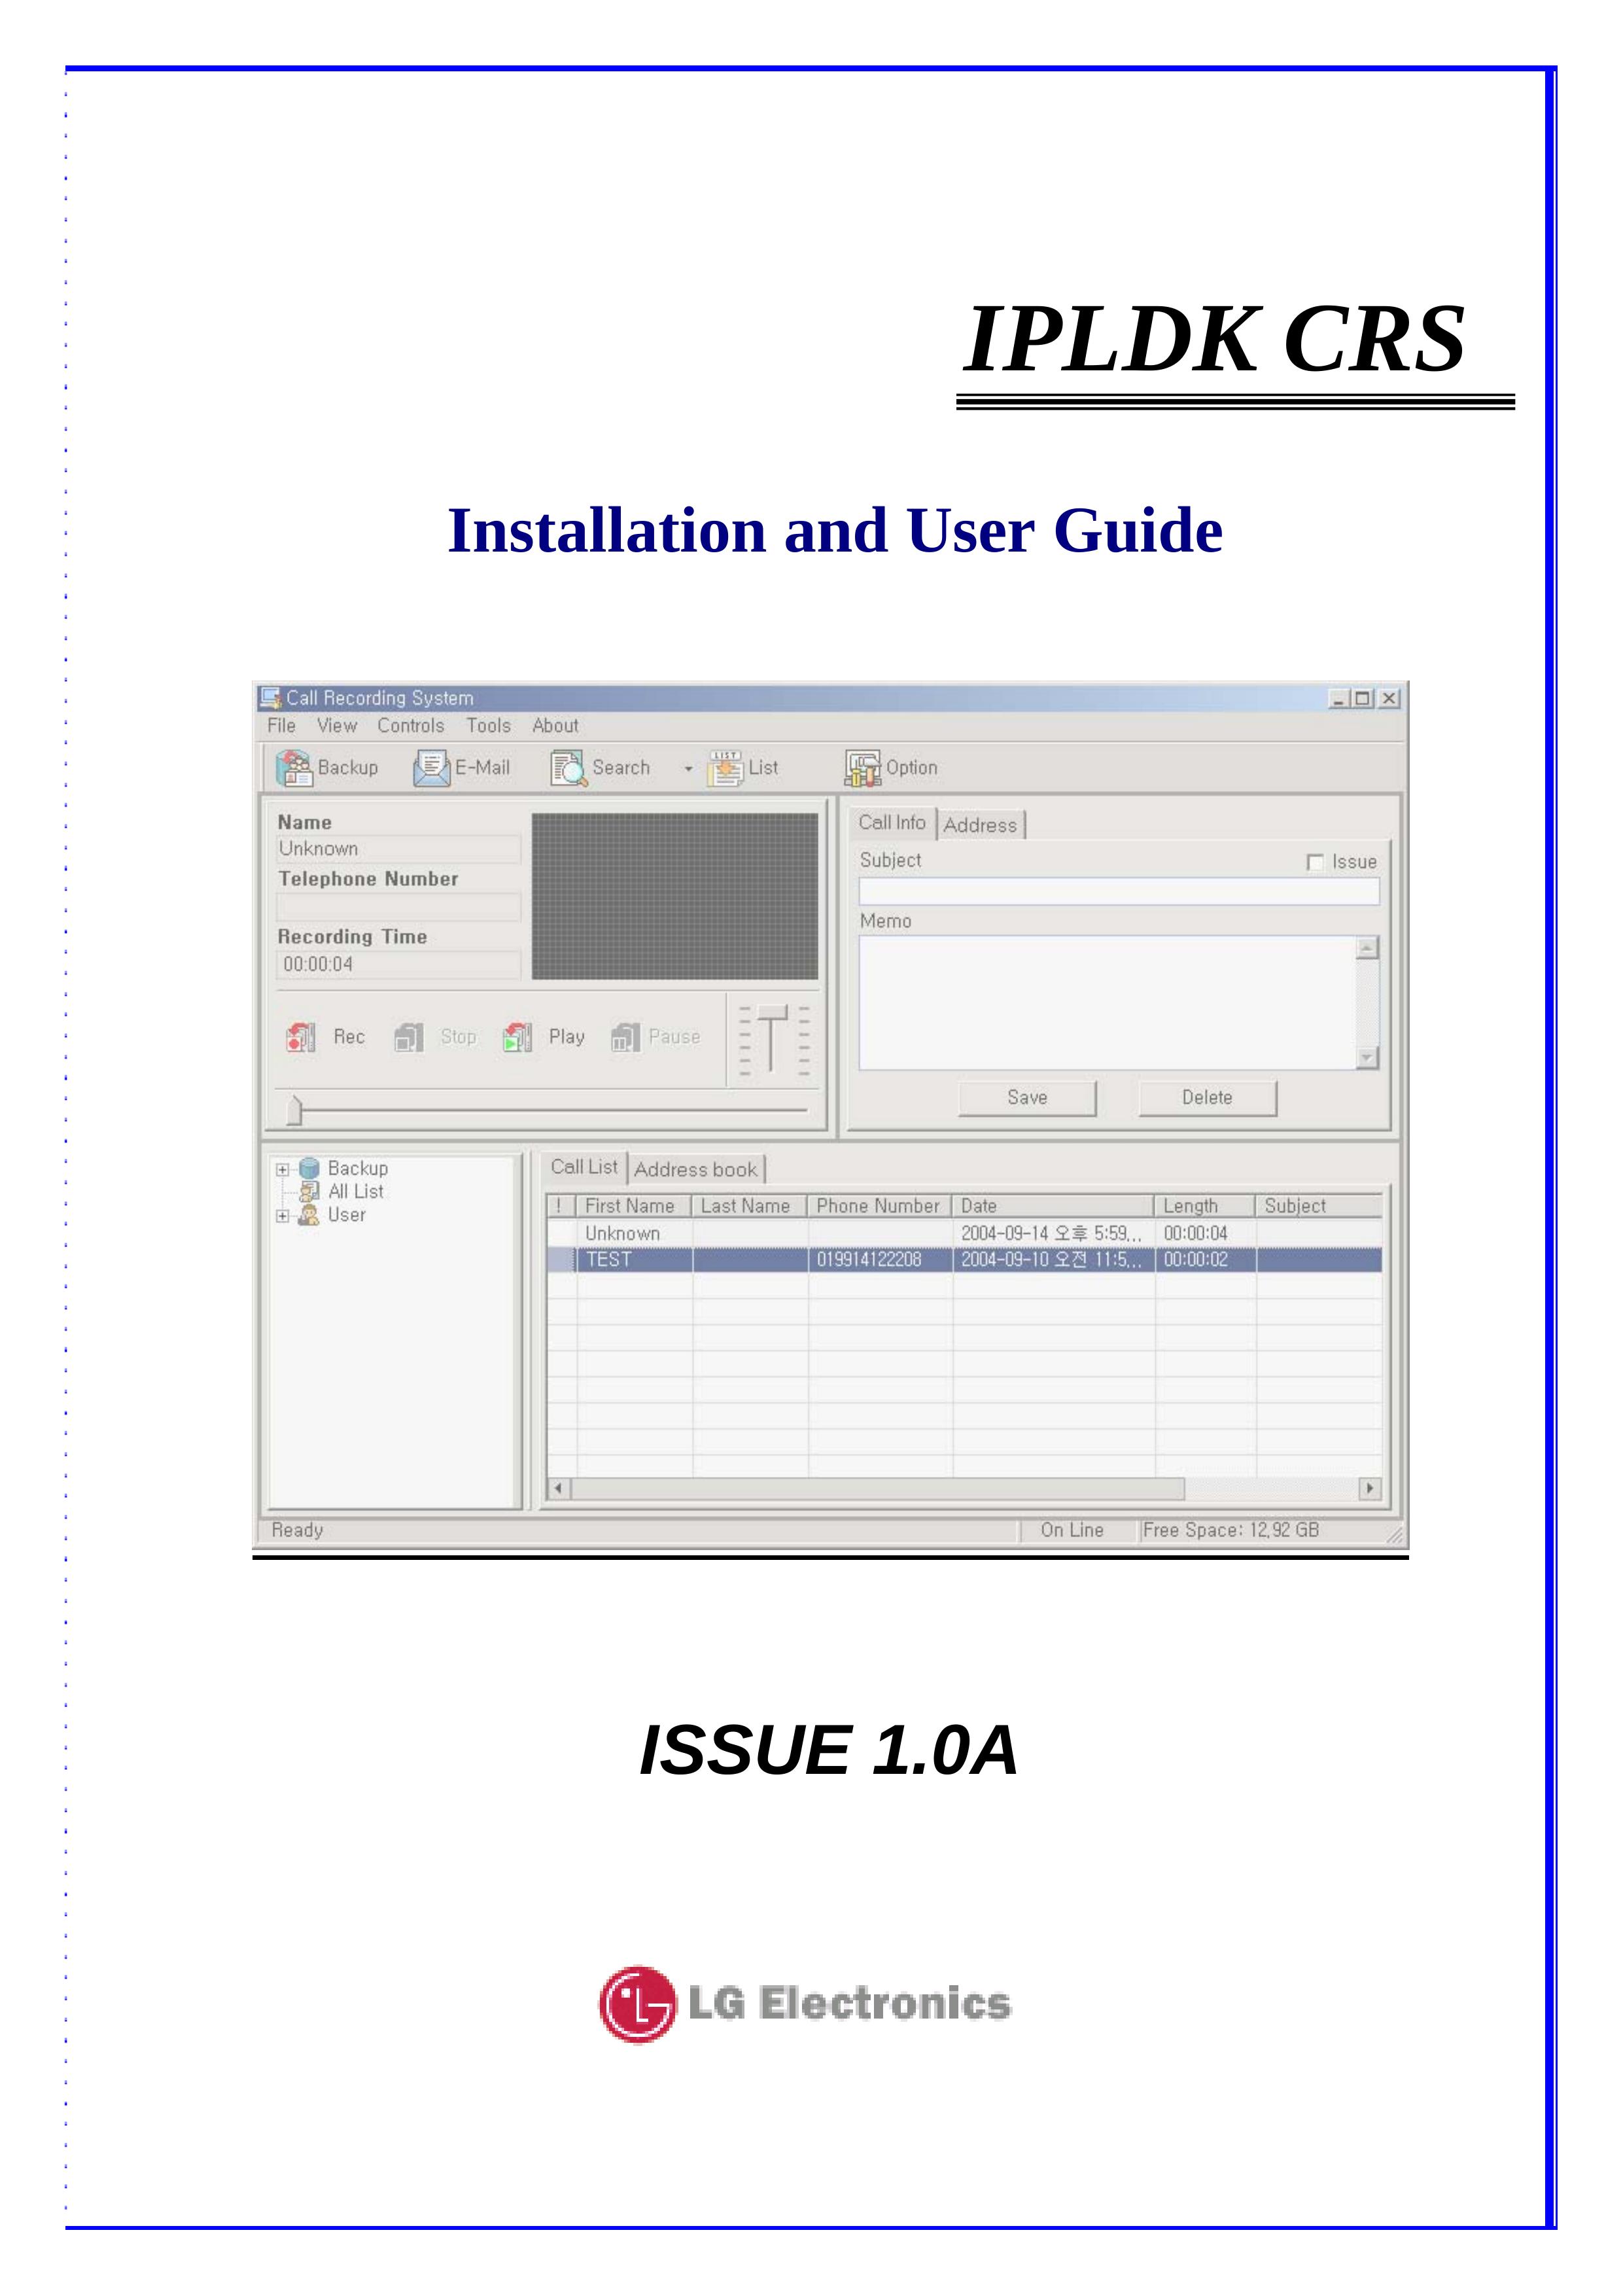 LG Electronics IPLDK CRS Recording Equipment User Manual